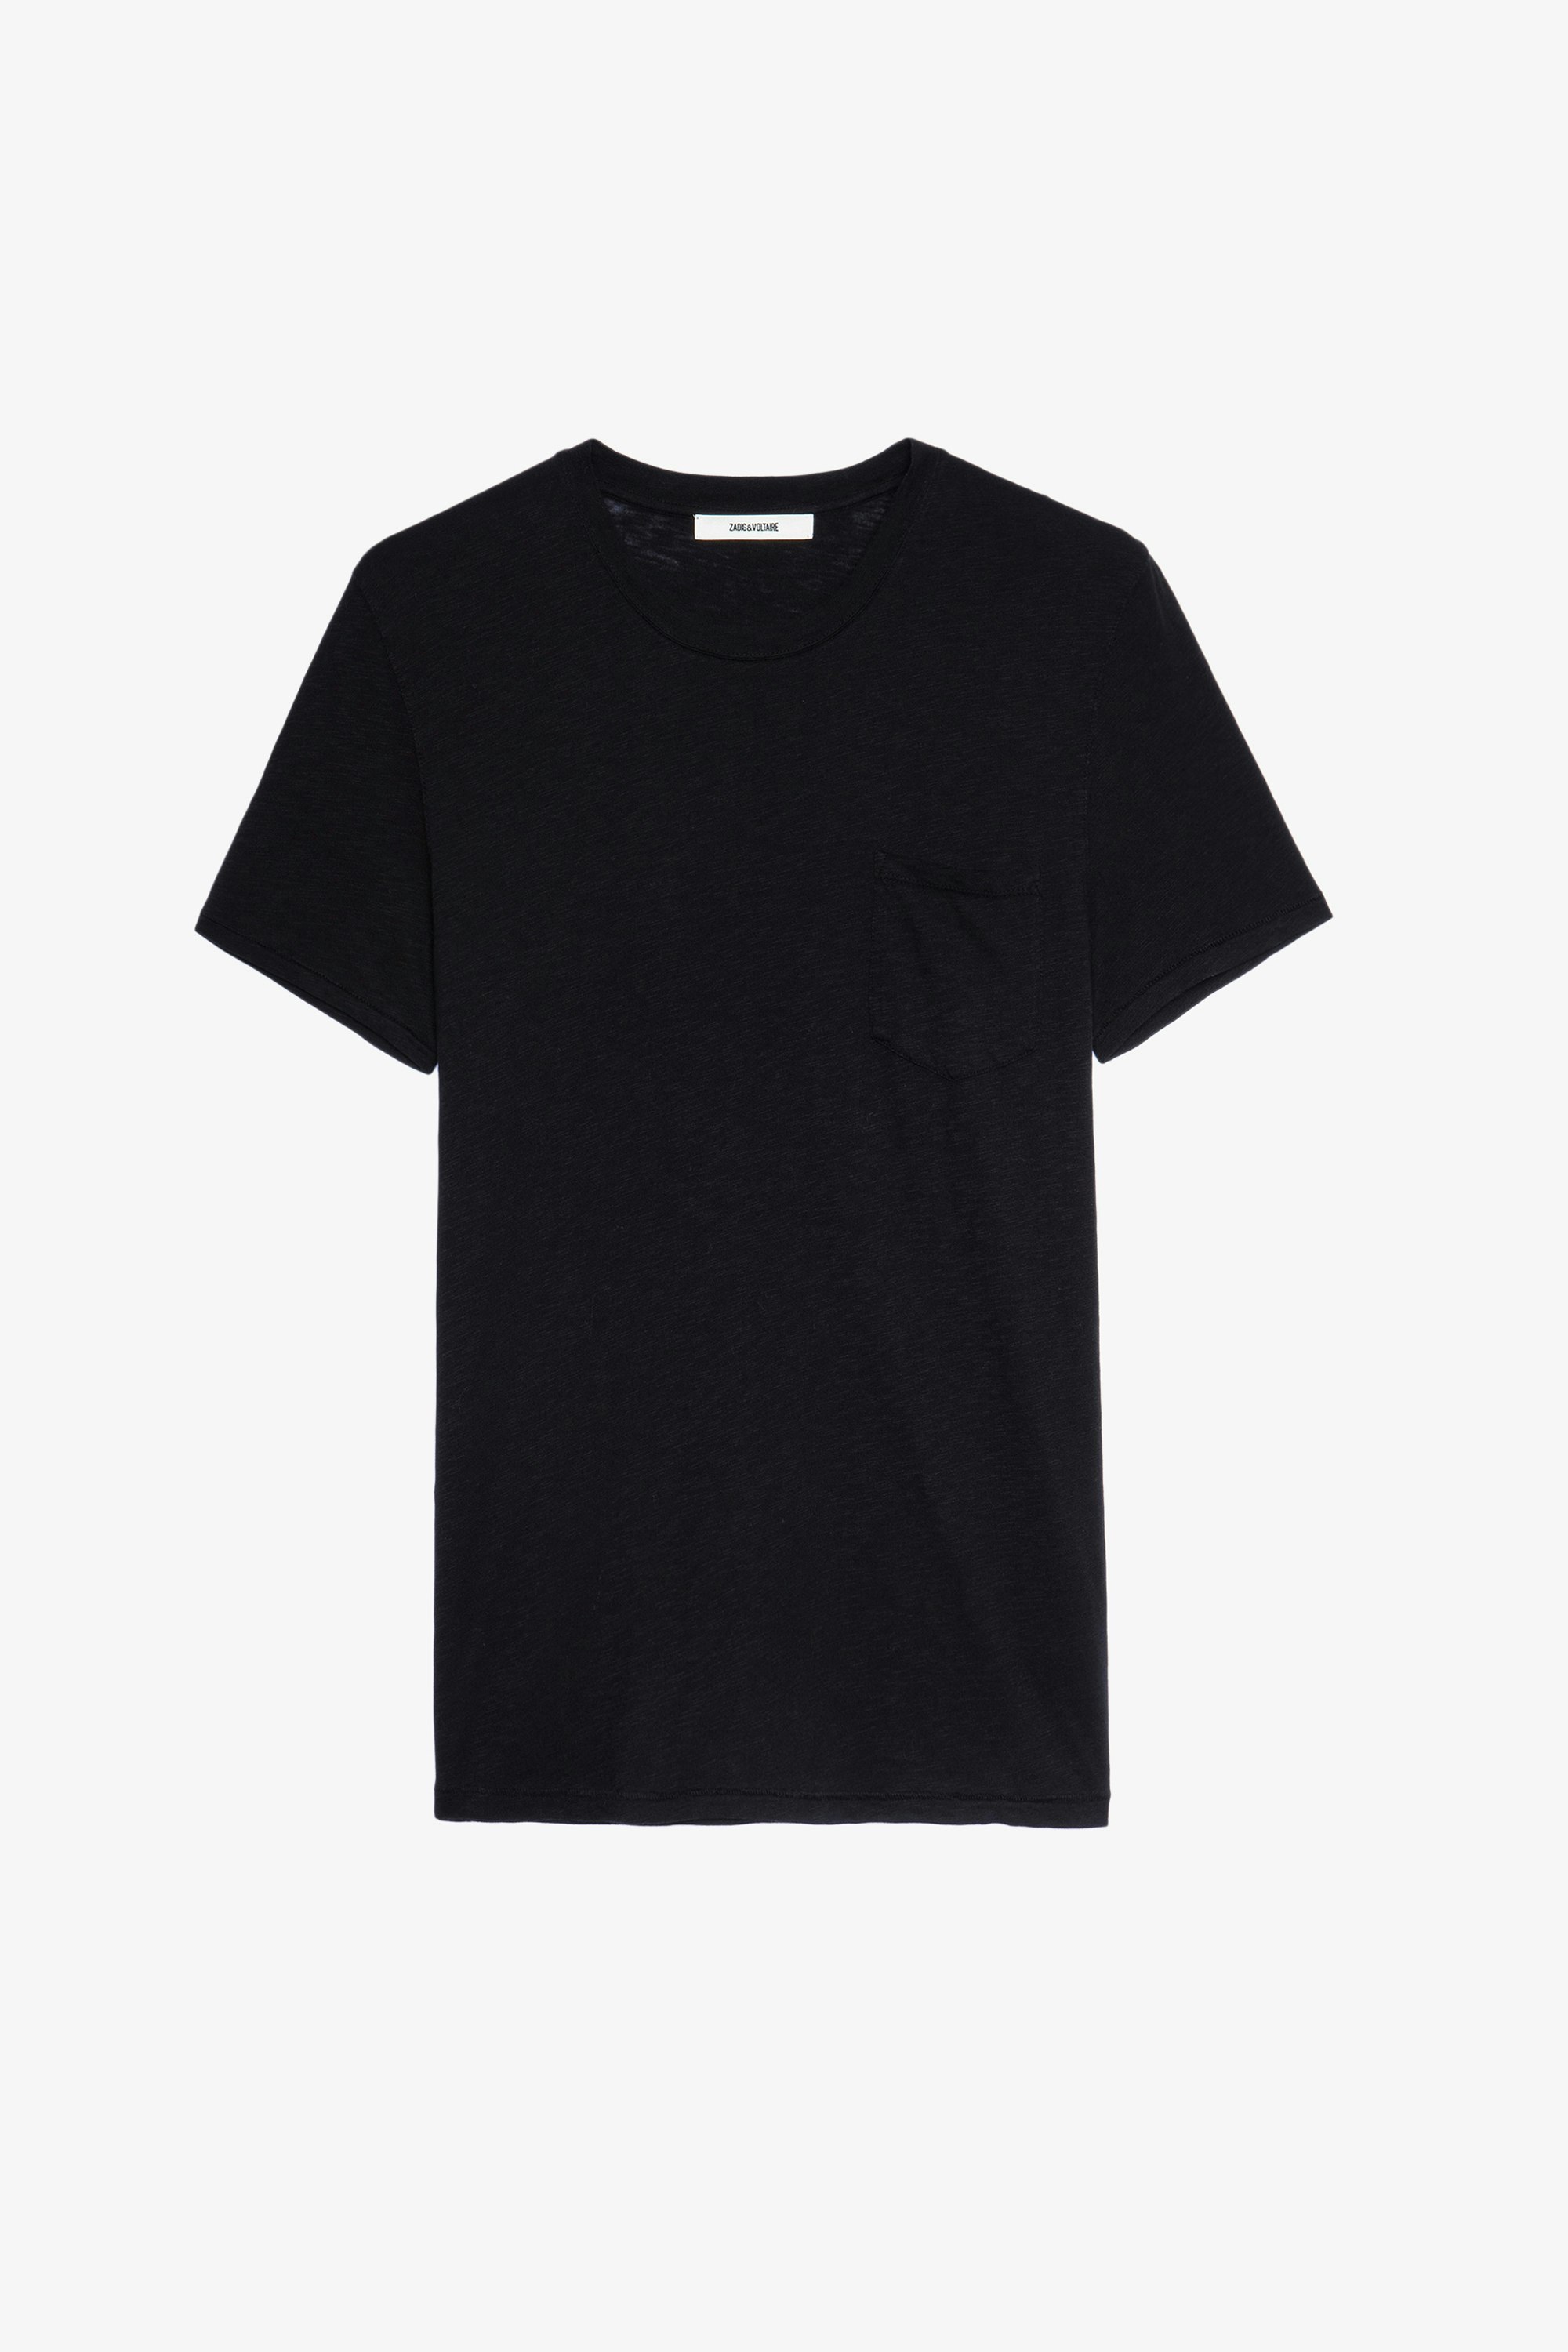 Stockholm T-shirt - Men's white round-neck T-shirt